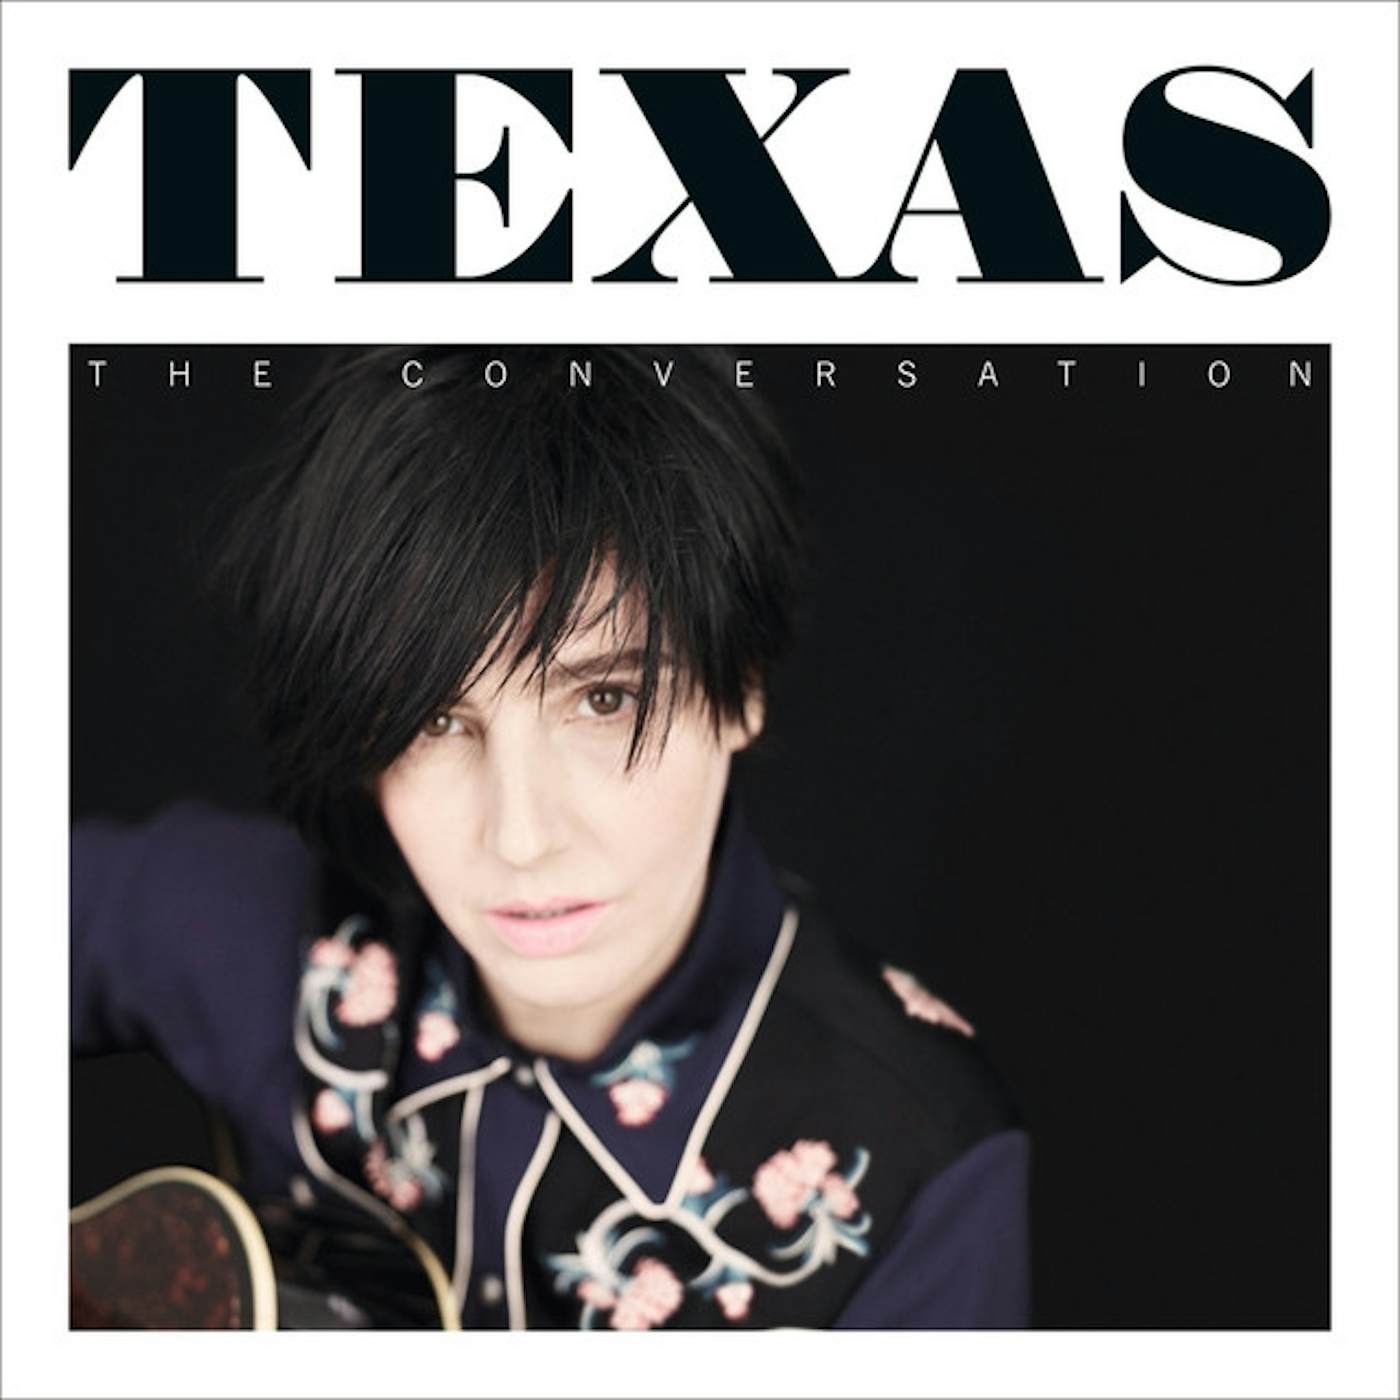 Texas CONVERSATION Vinyl Record